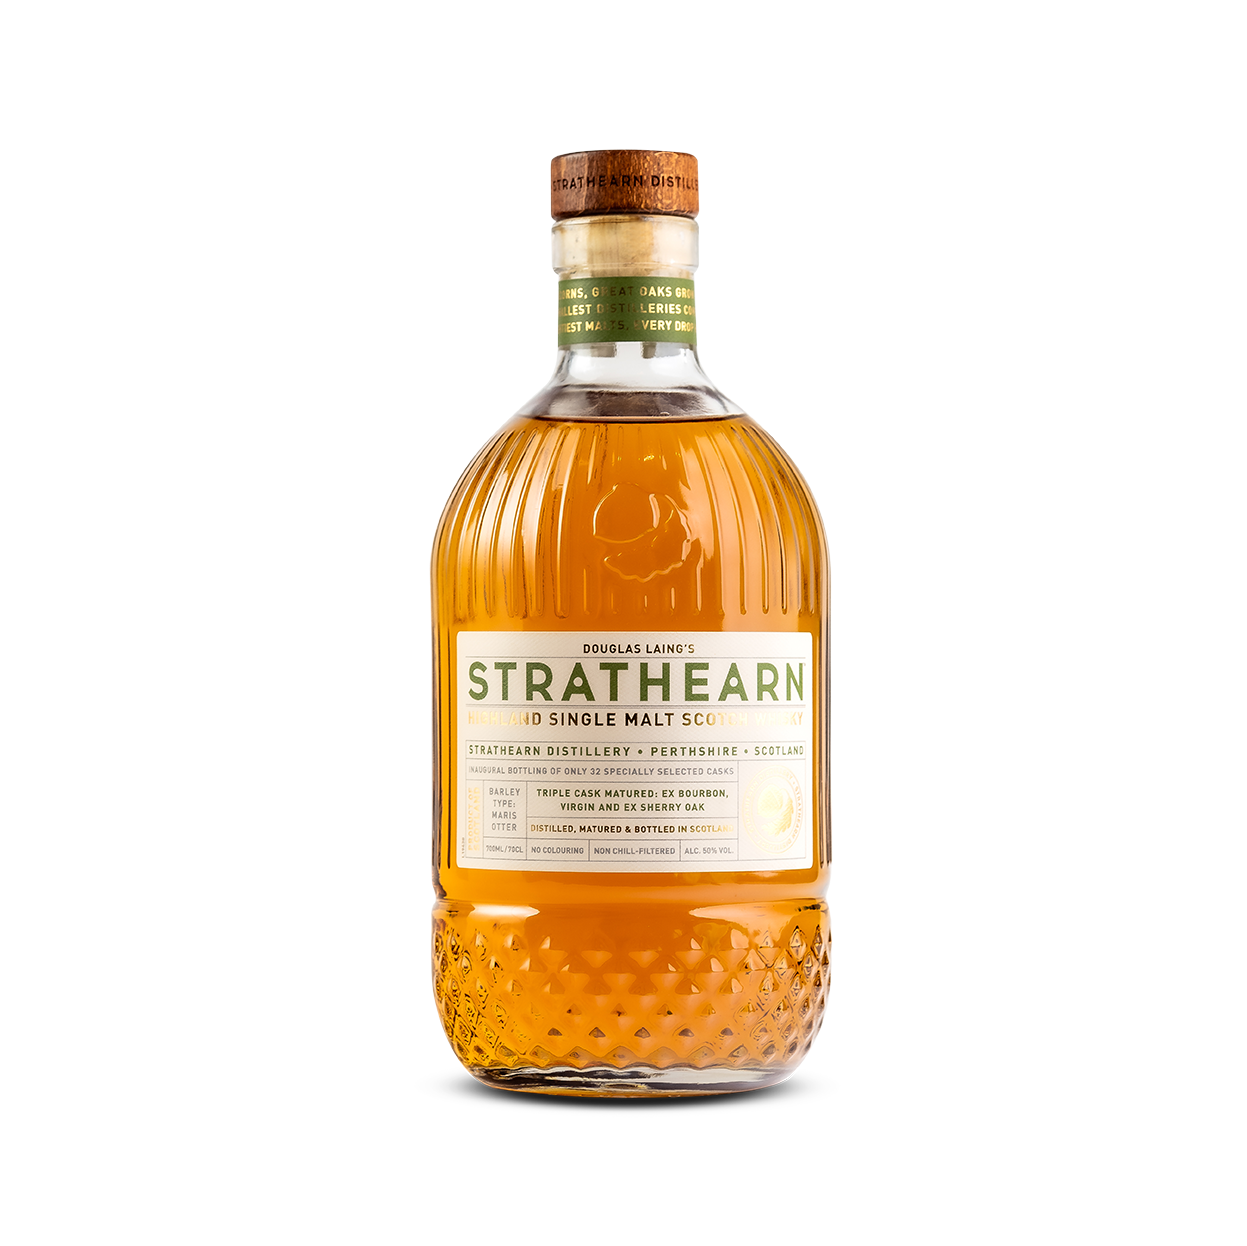 Destilería Strathearn, Douglas Laing - Lanzamiento inaugural, whisky de pura malta